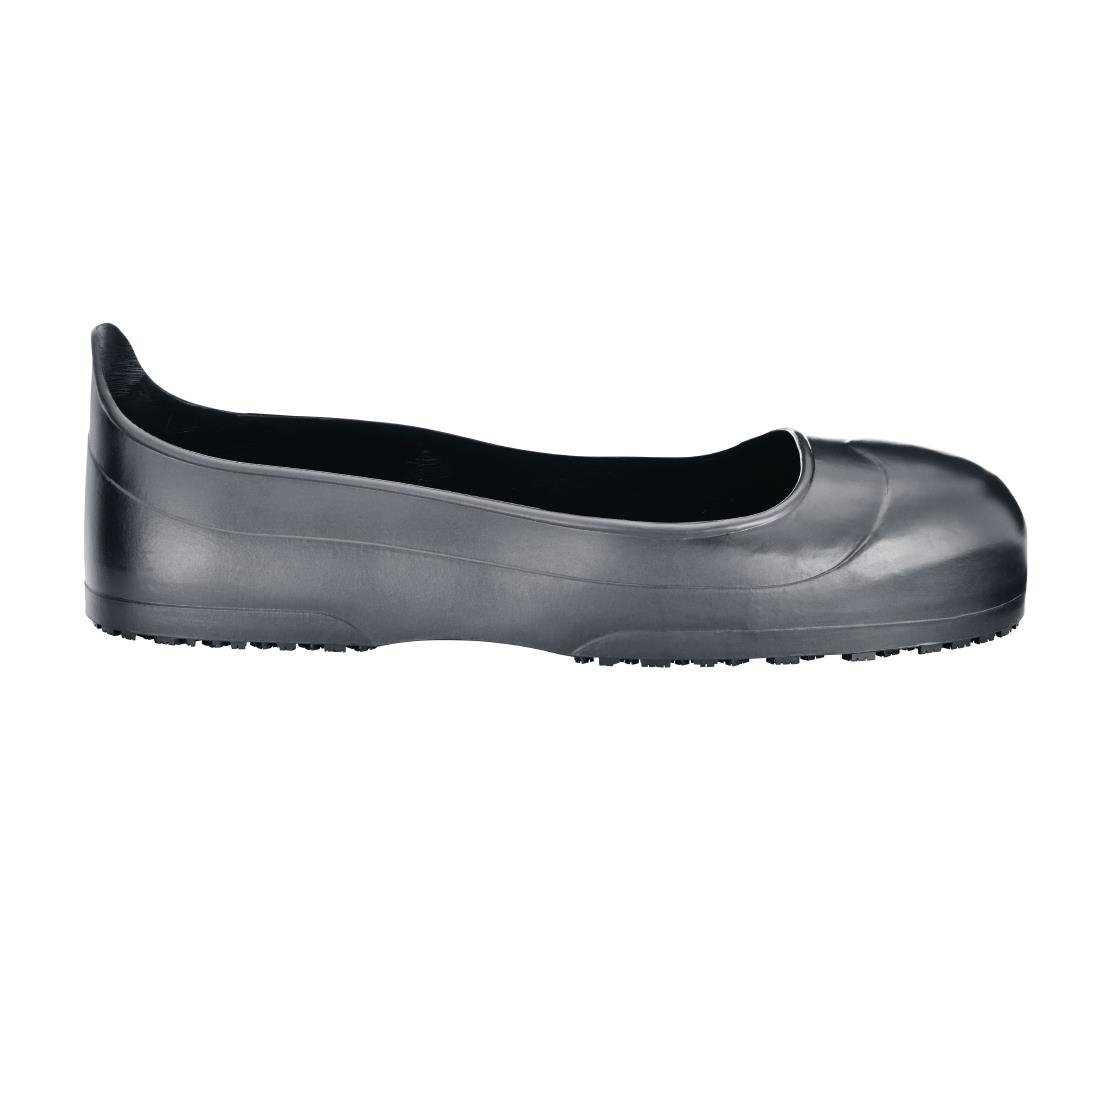 BB614-M Shoes for Crews Crewguard Overshoes Steel Toe Cap Size M